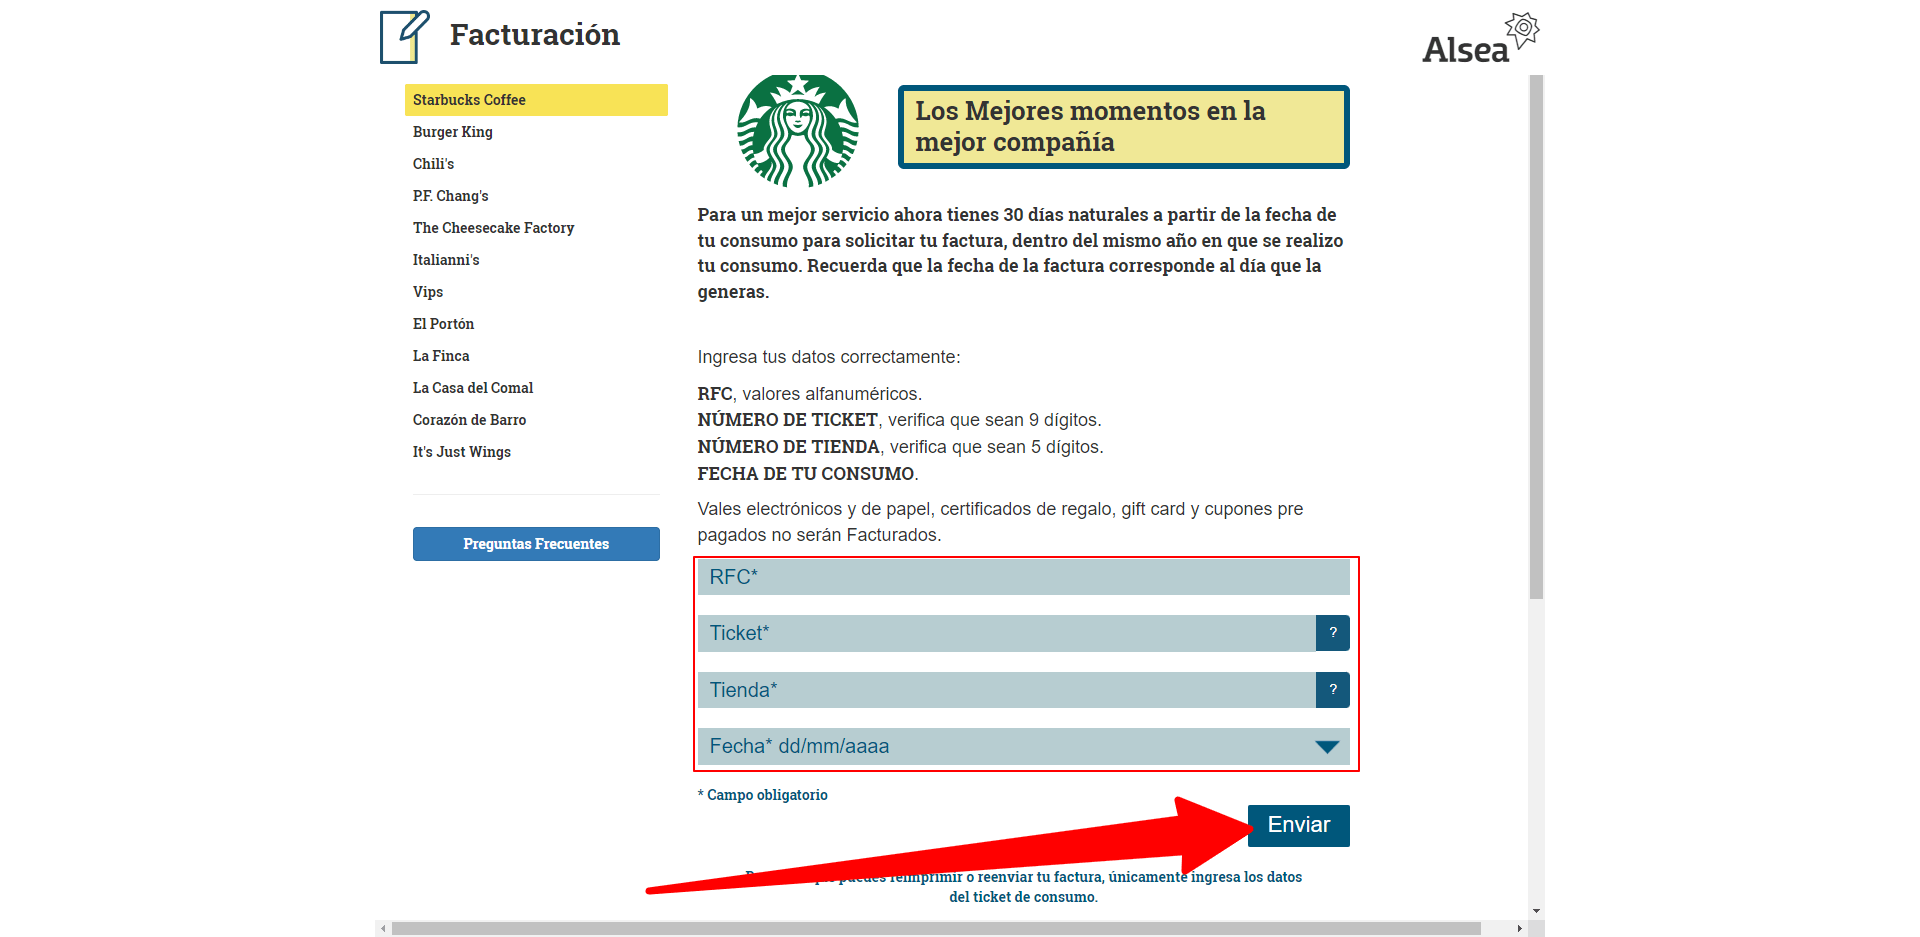 ingresar ticket y rfc facturar Starbucks Facturacion ADN Fiscal